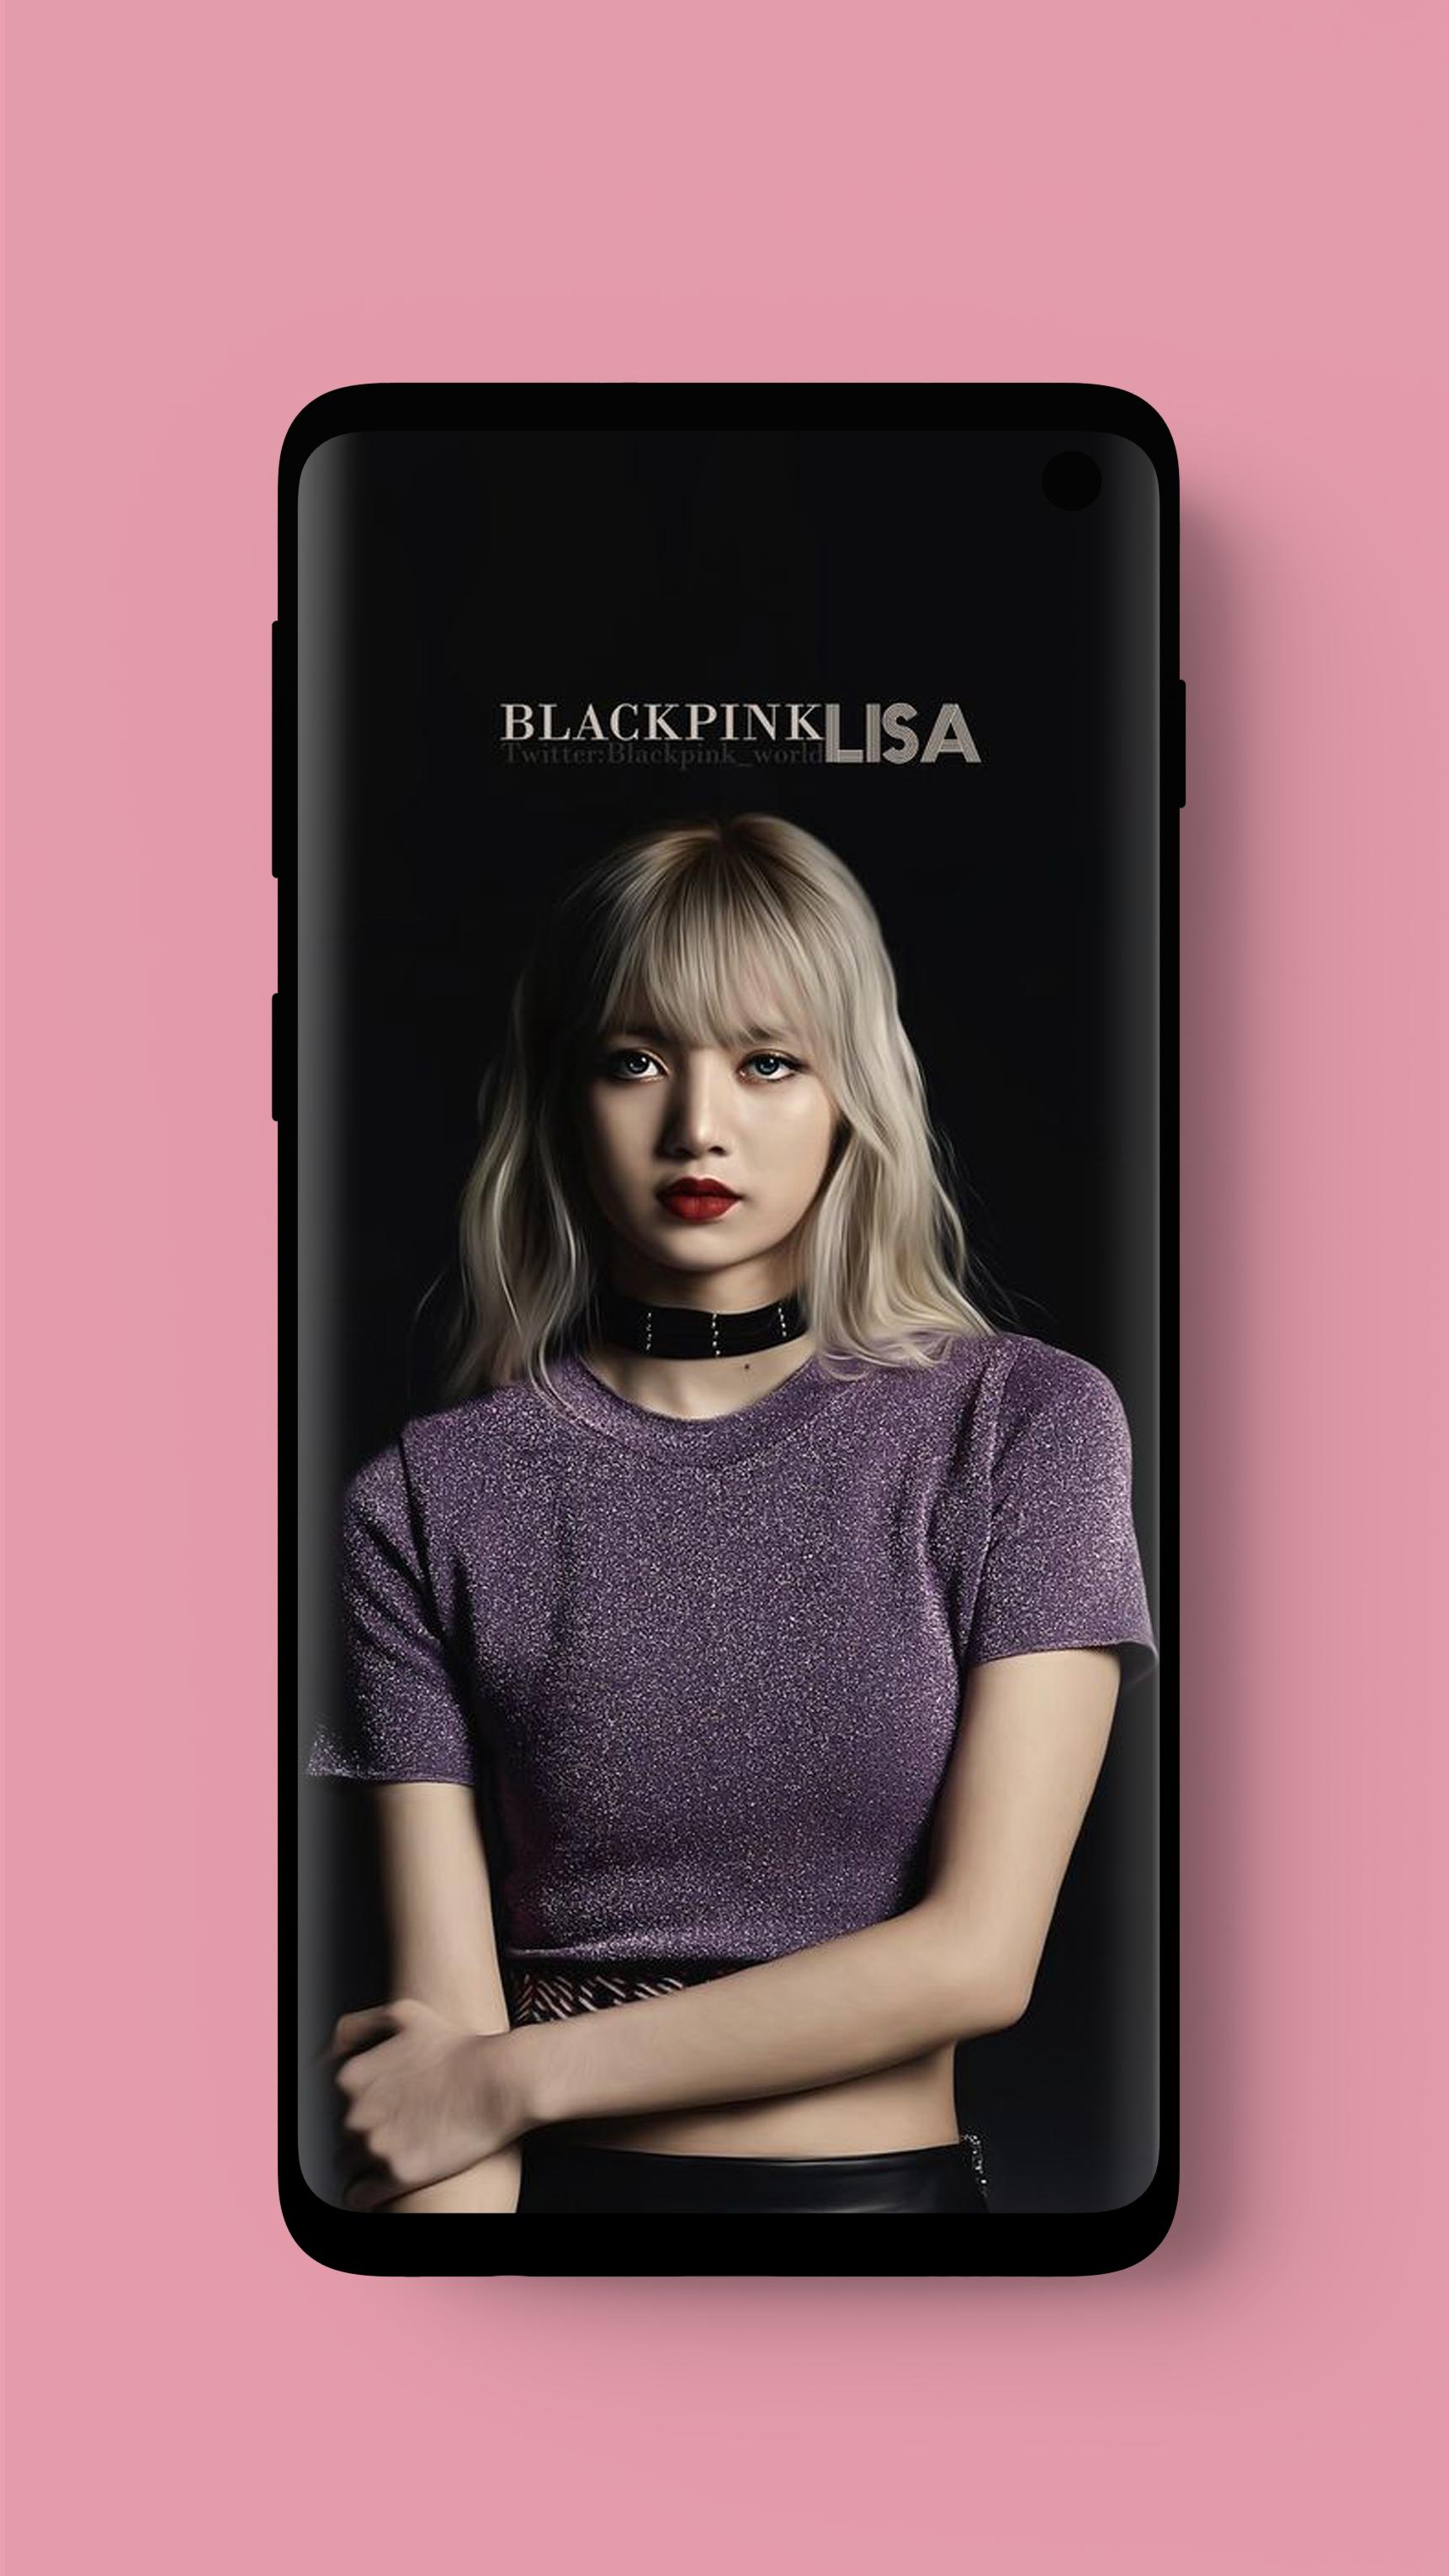 Blackpink Lisa Wallpaper Hd 2k Photos For Android Apk Download